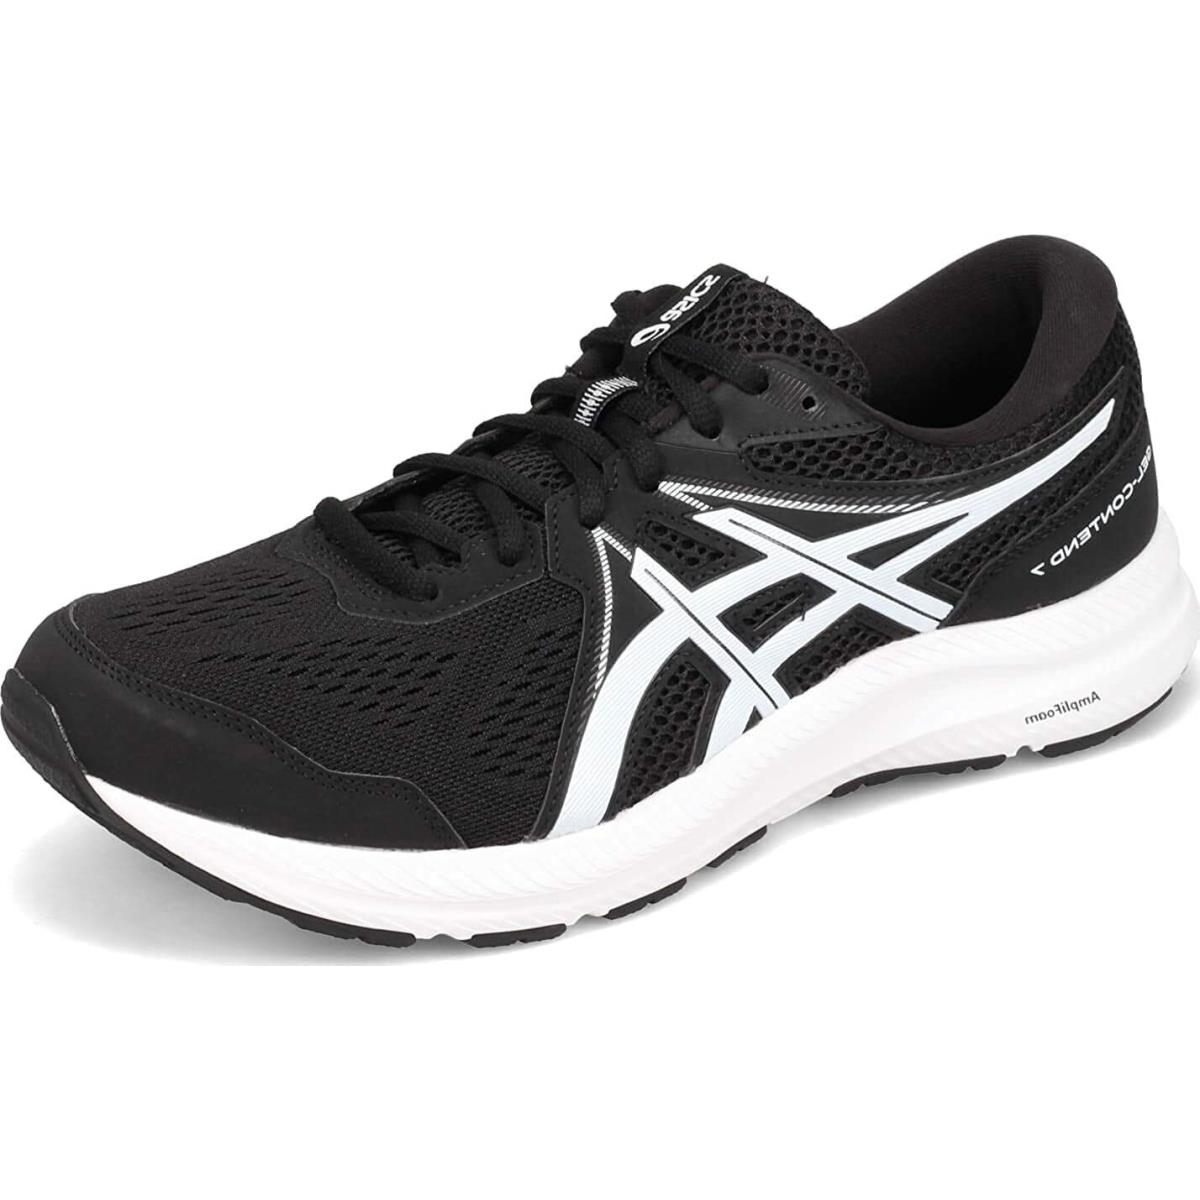 Asics Mens Gel-contend 7 Running Shoe 1011B039 002 Black/white Size 8.5 Wide